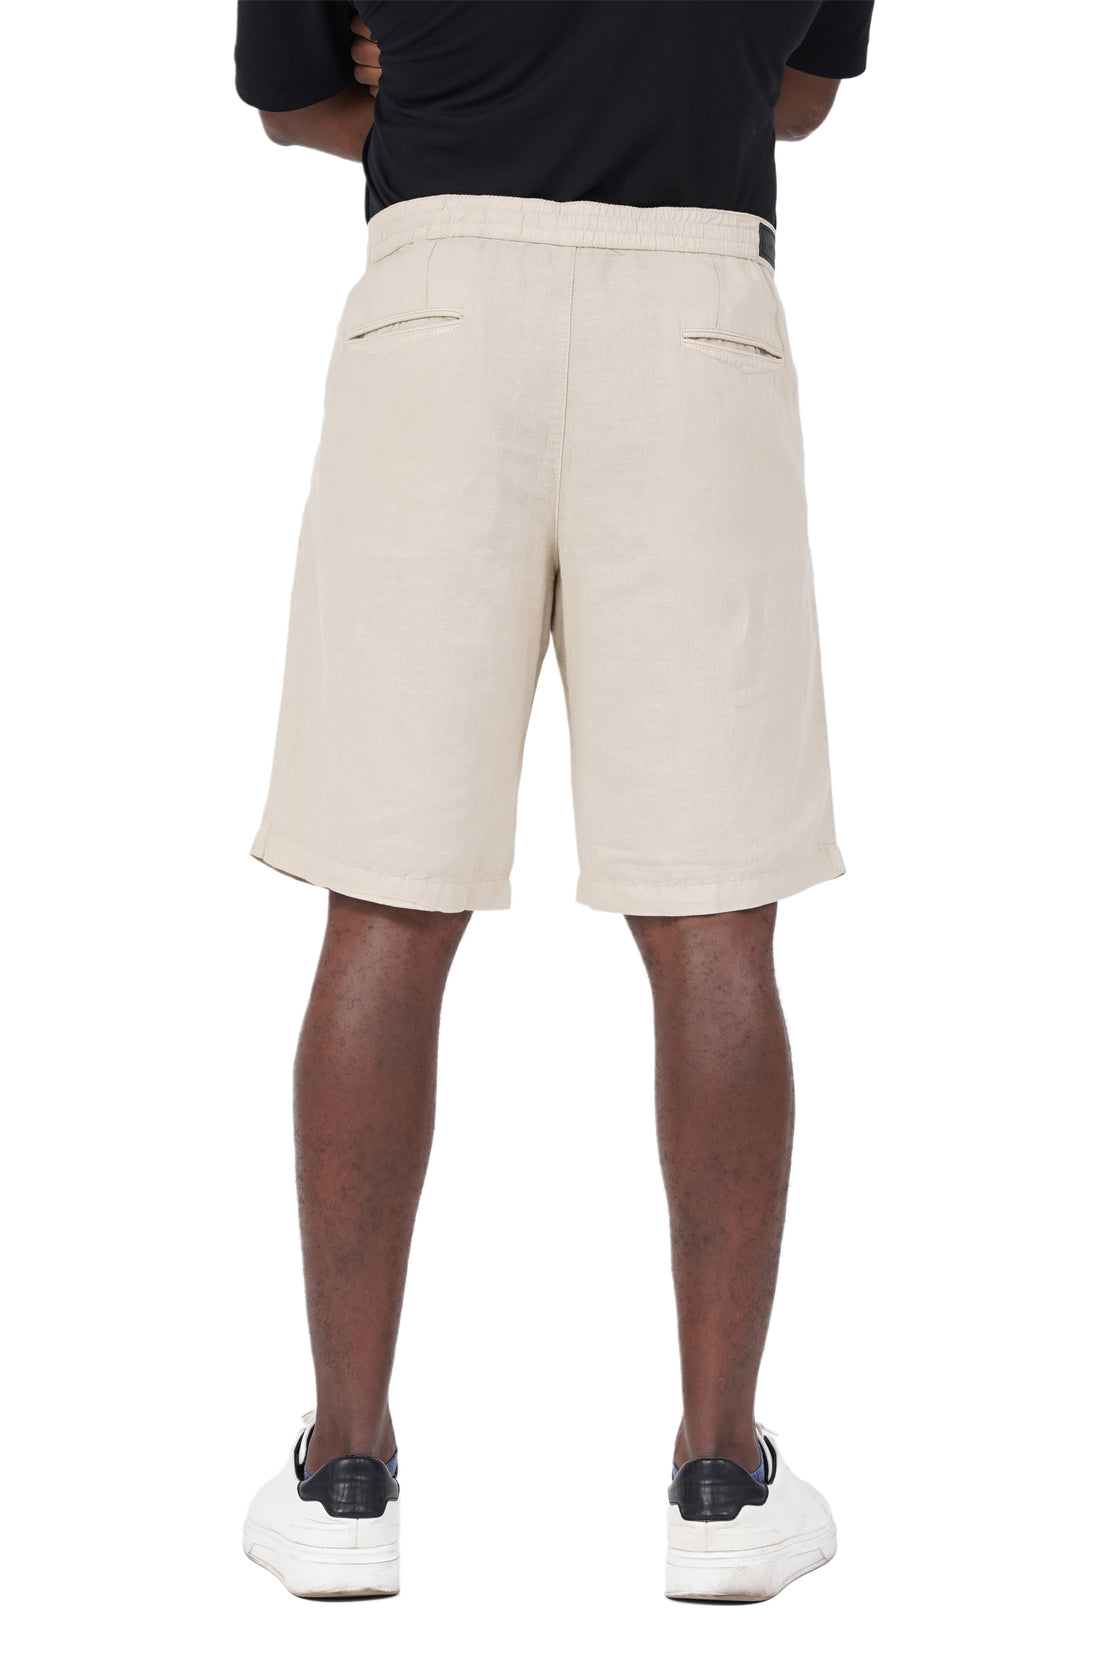 16 Shades Linen Shorts